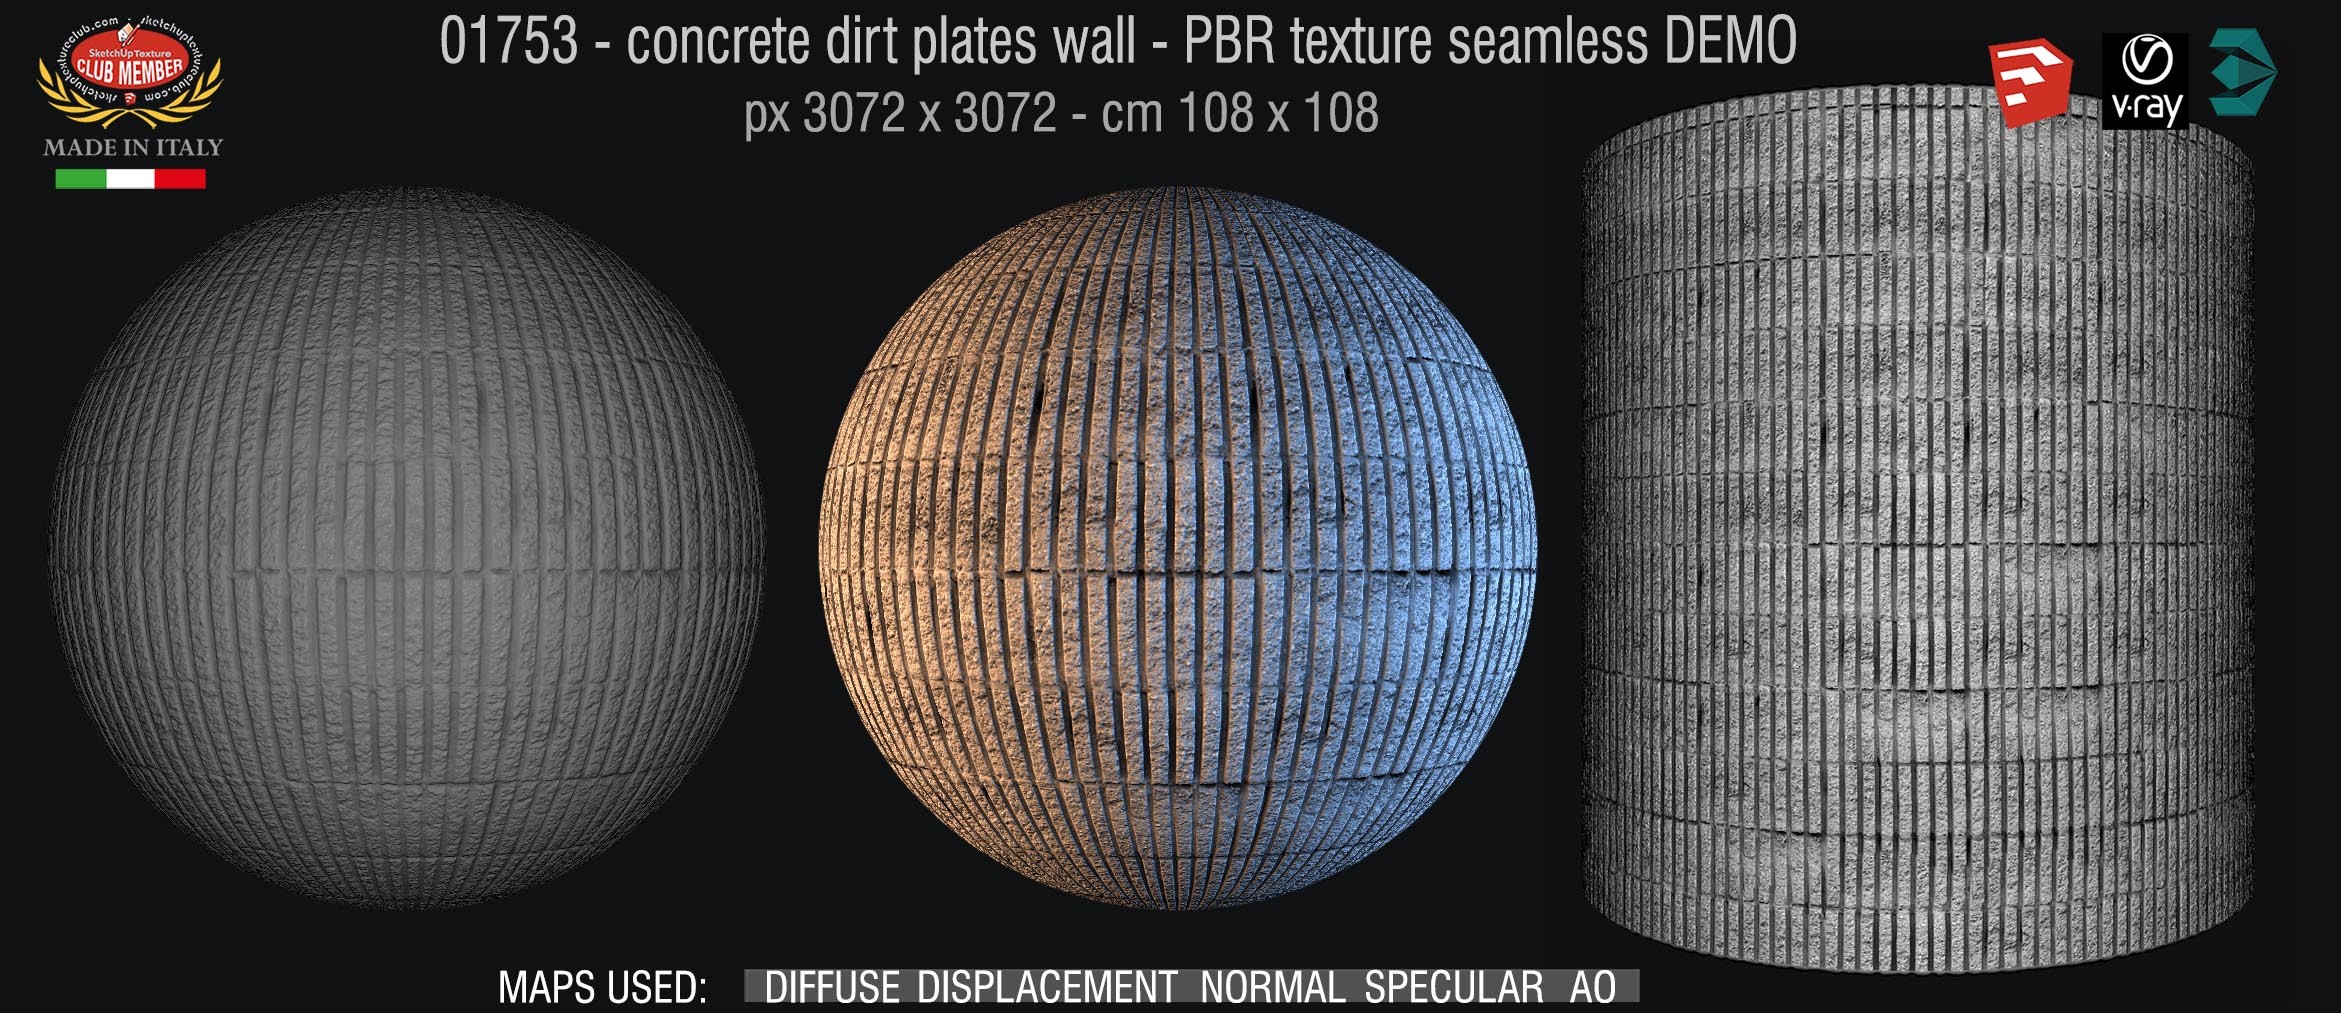 01753 concrete dirt plates wall PBR texture seamless DEMO